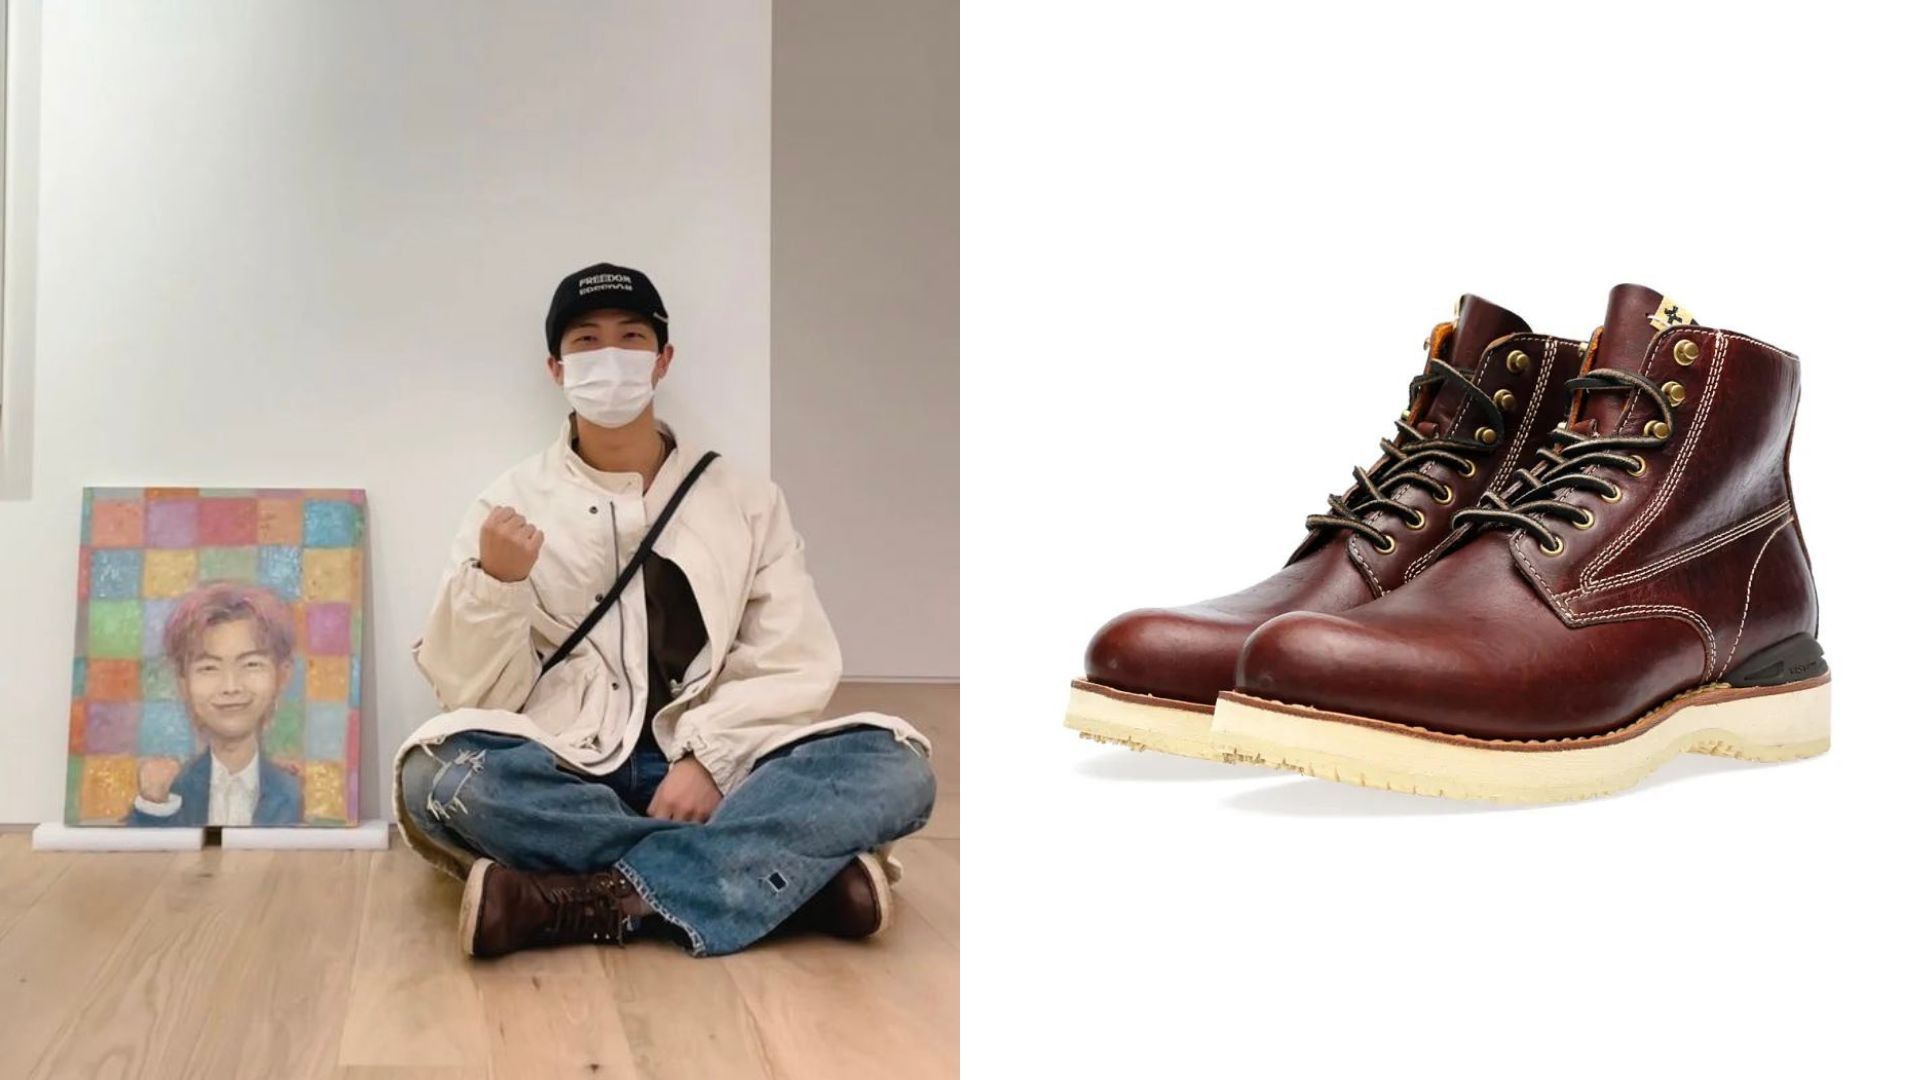 BTS RM expensive shoes